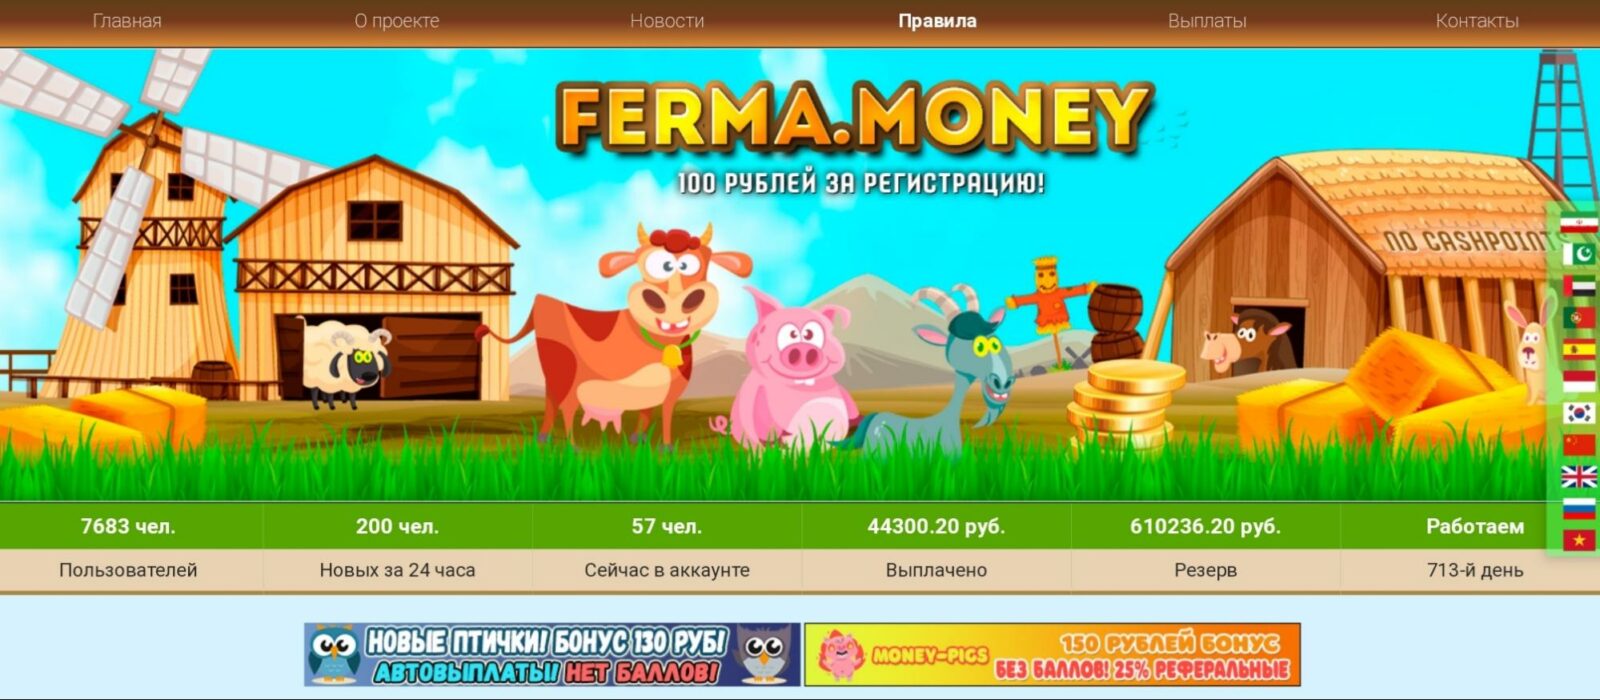 Ferma money сайт